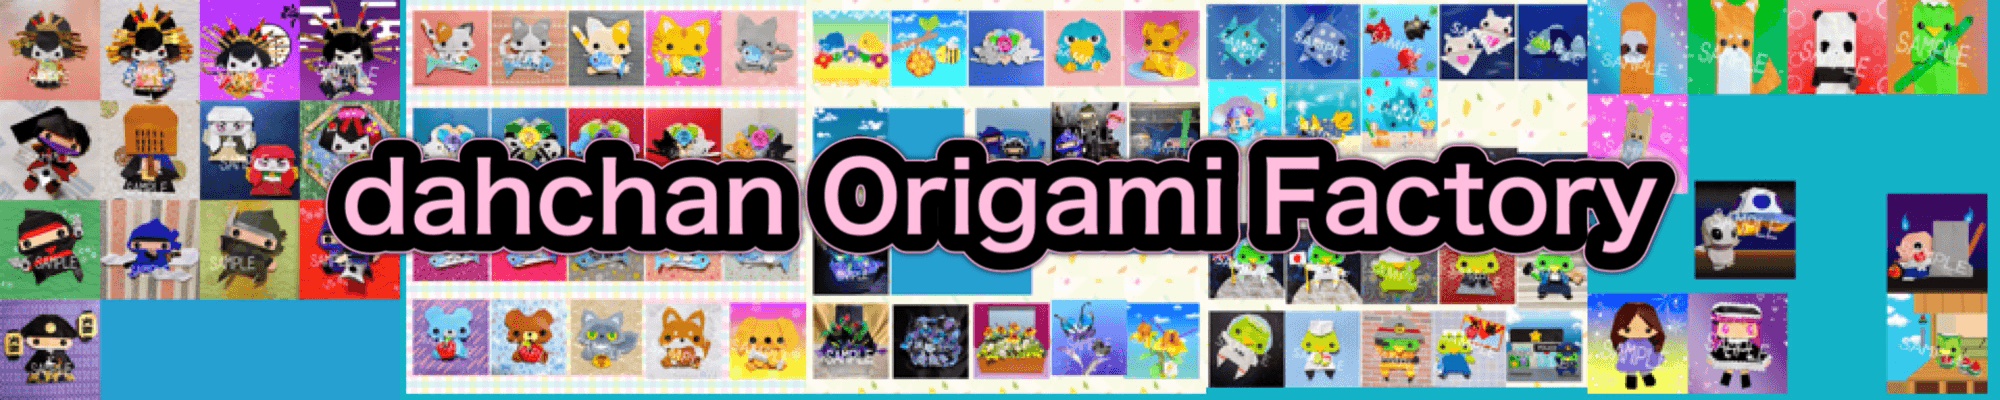 dahchan_origami_Factory banner